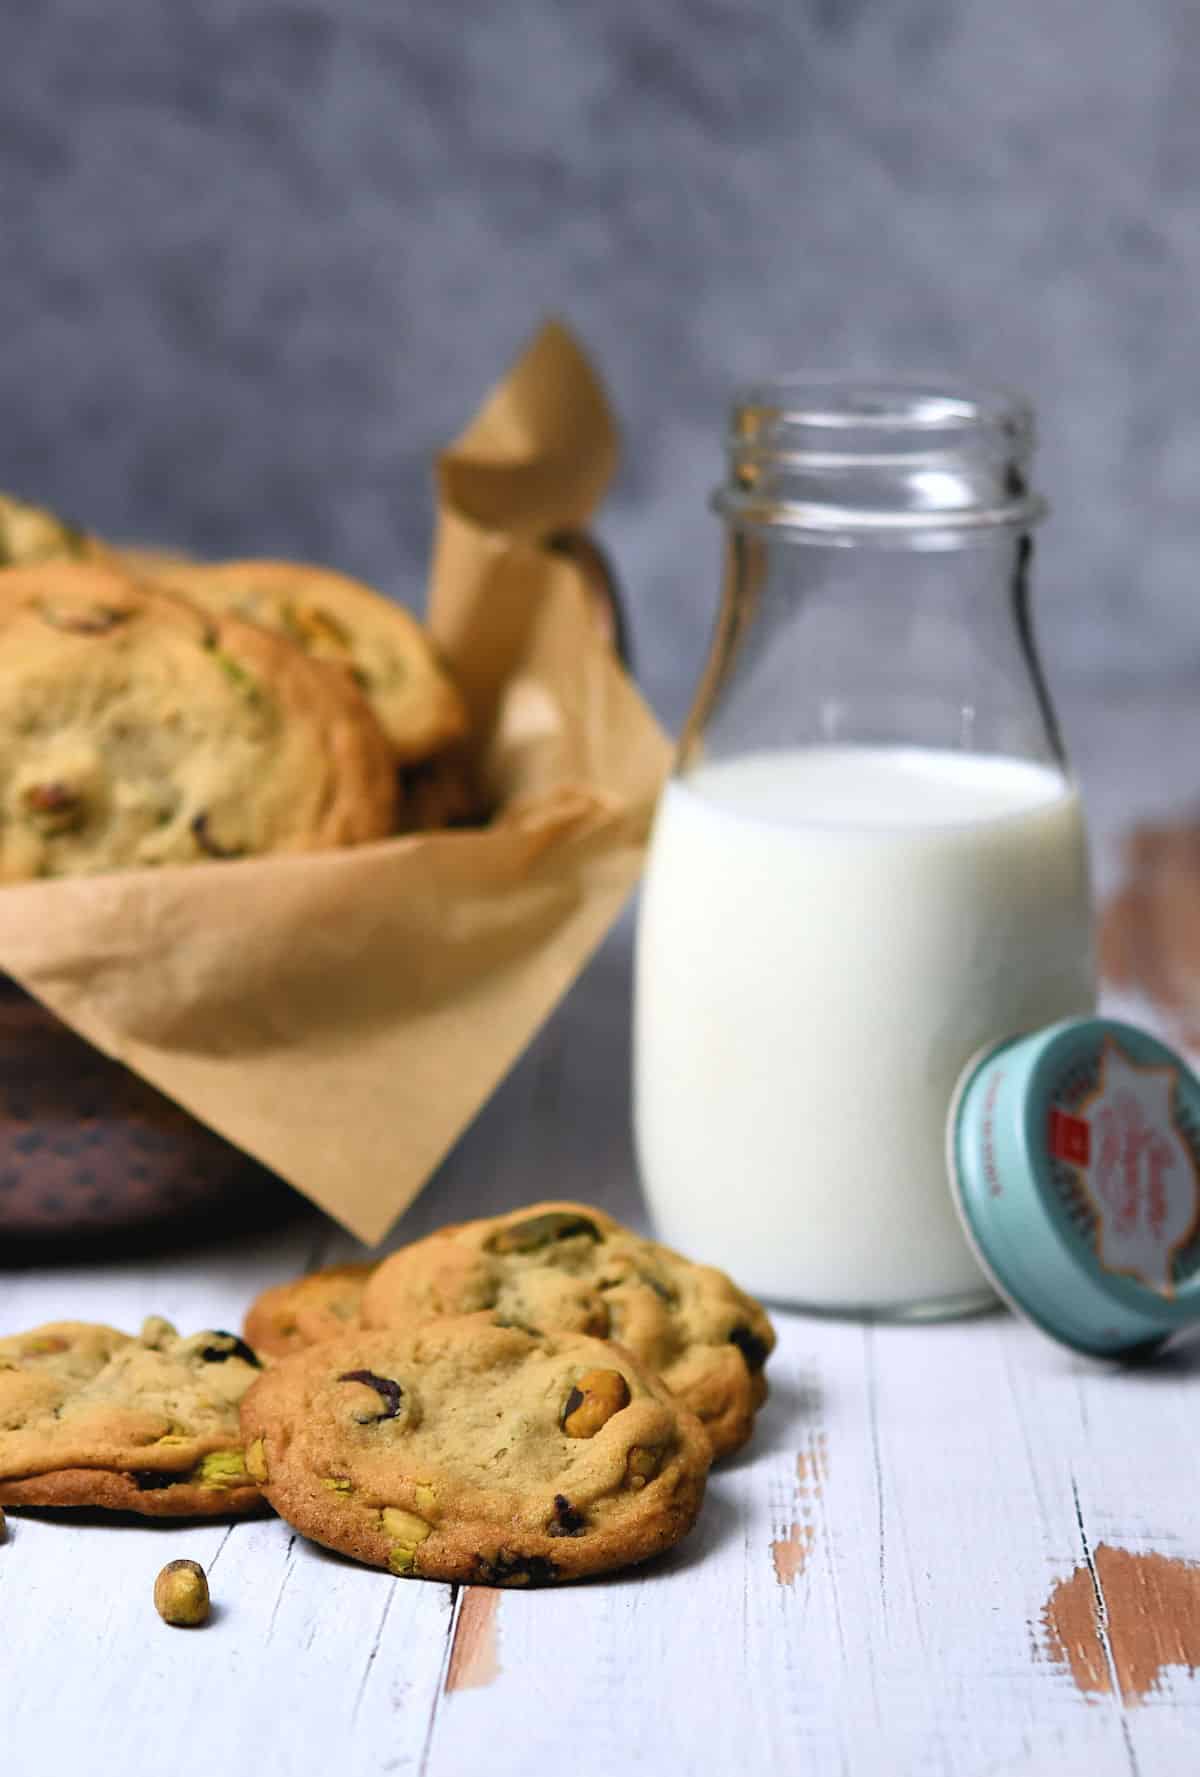 Pistachio Christmas Cookie Recipe by Christmas Guzman for 24Bite